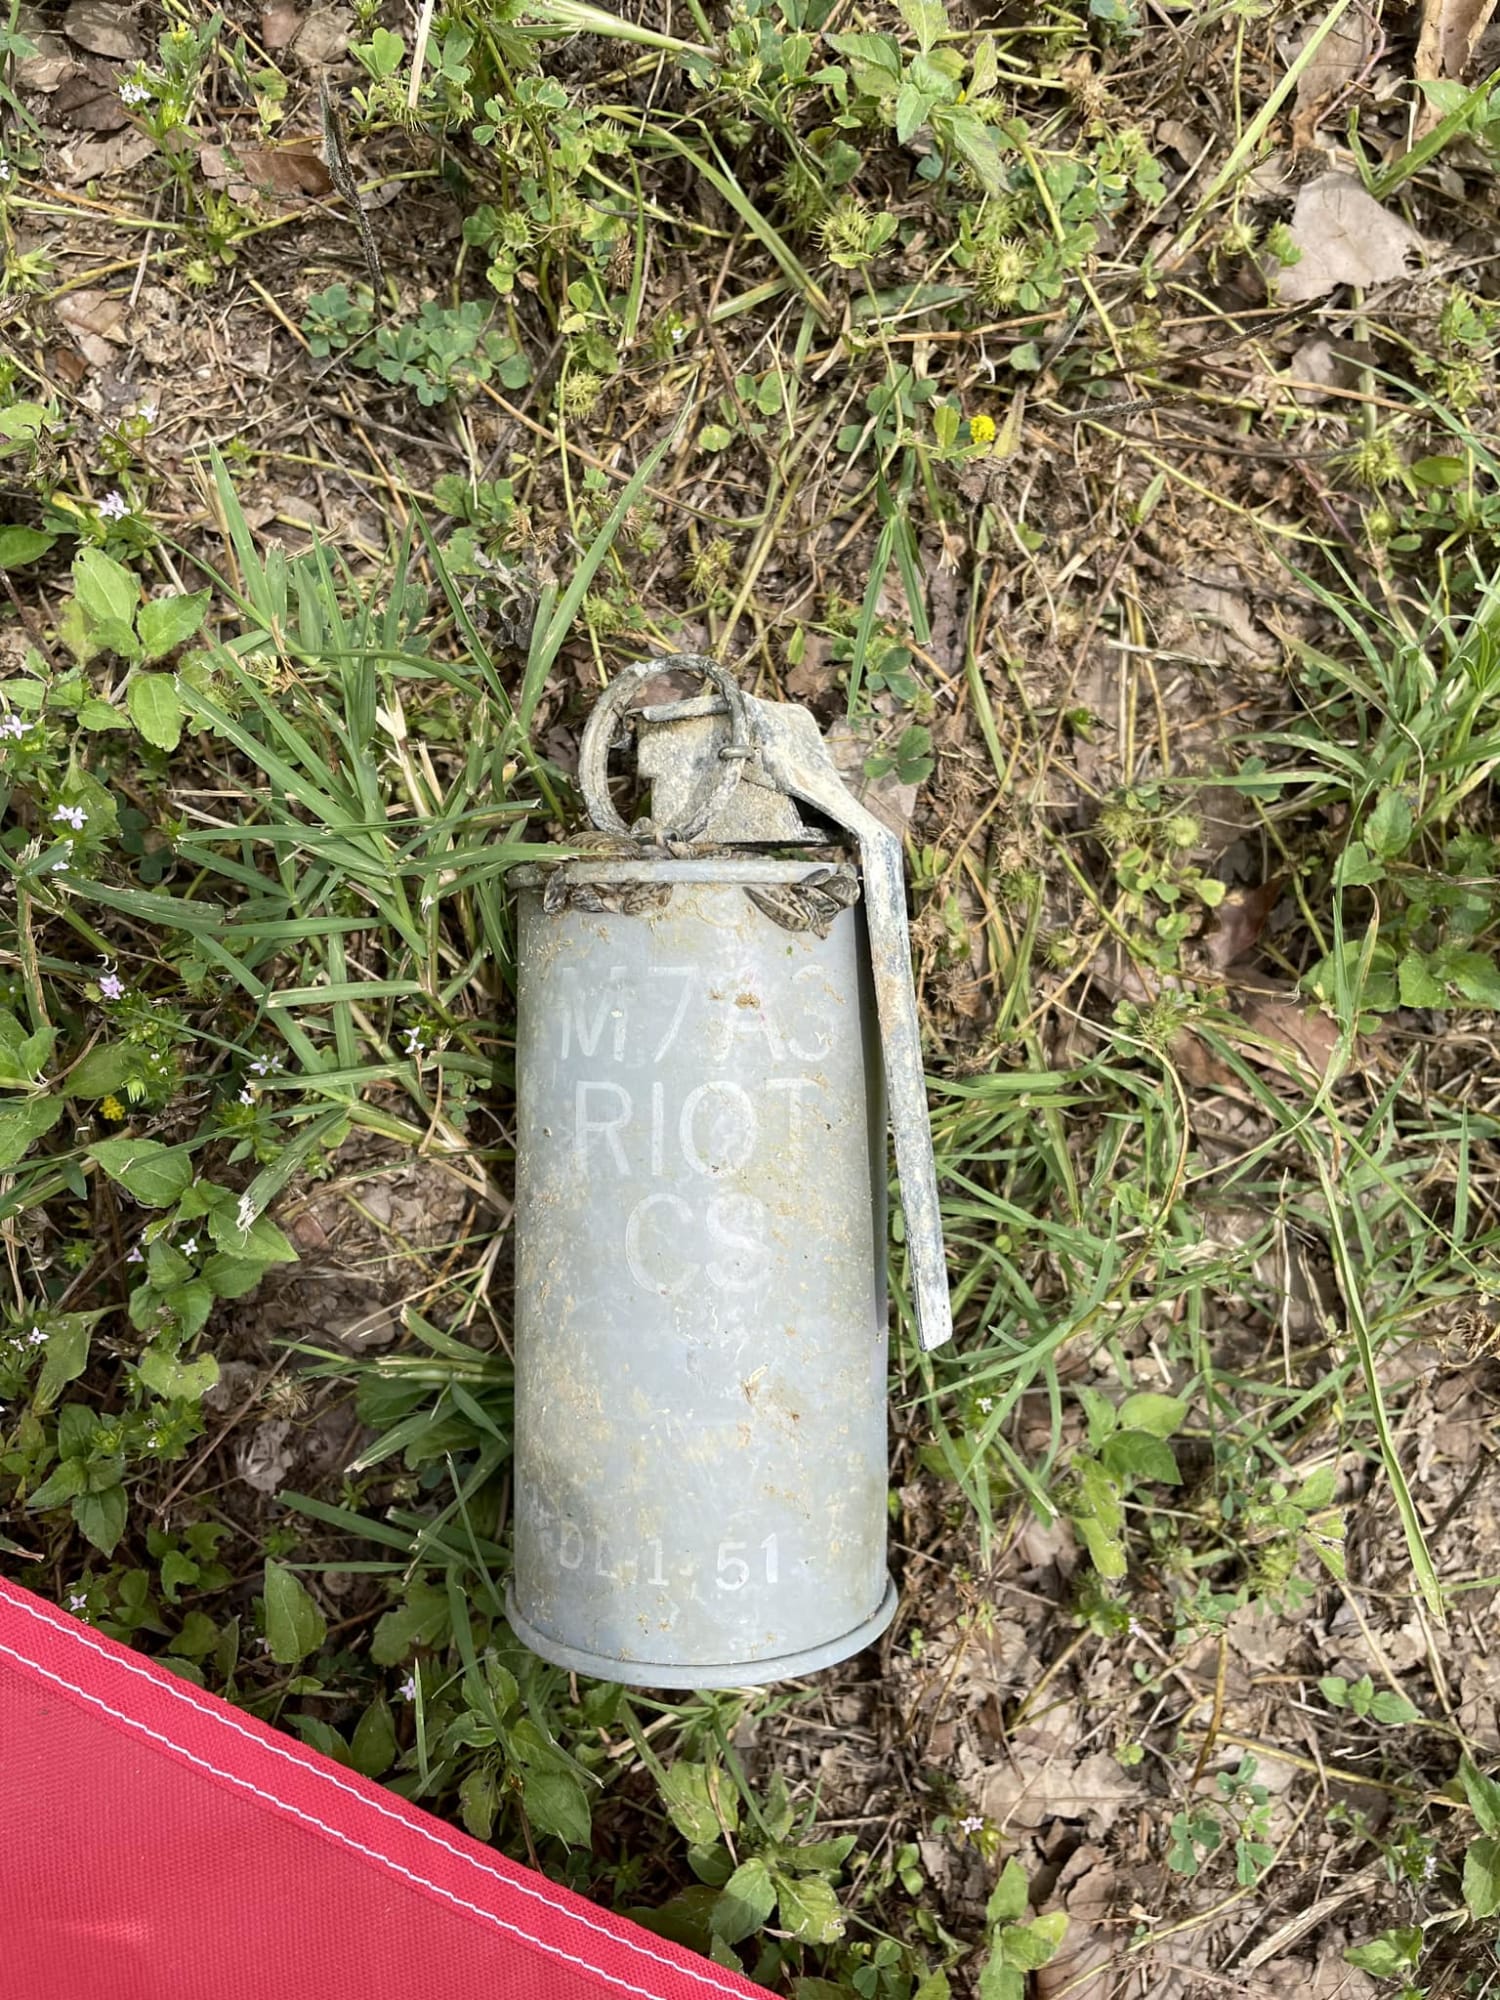 Scuba diver finds live tear gas grenade in Oklahoma lake